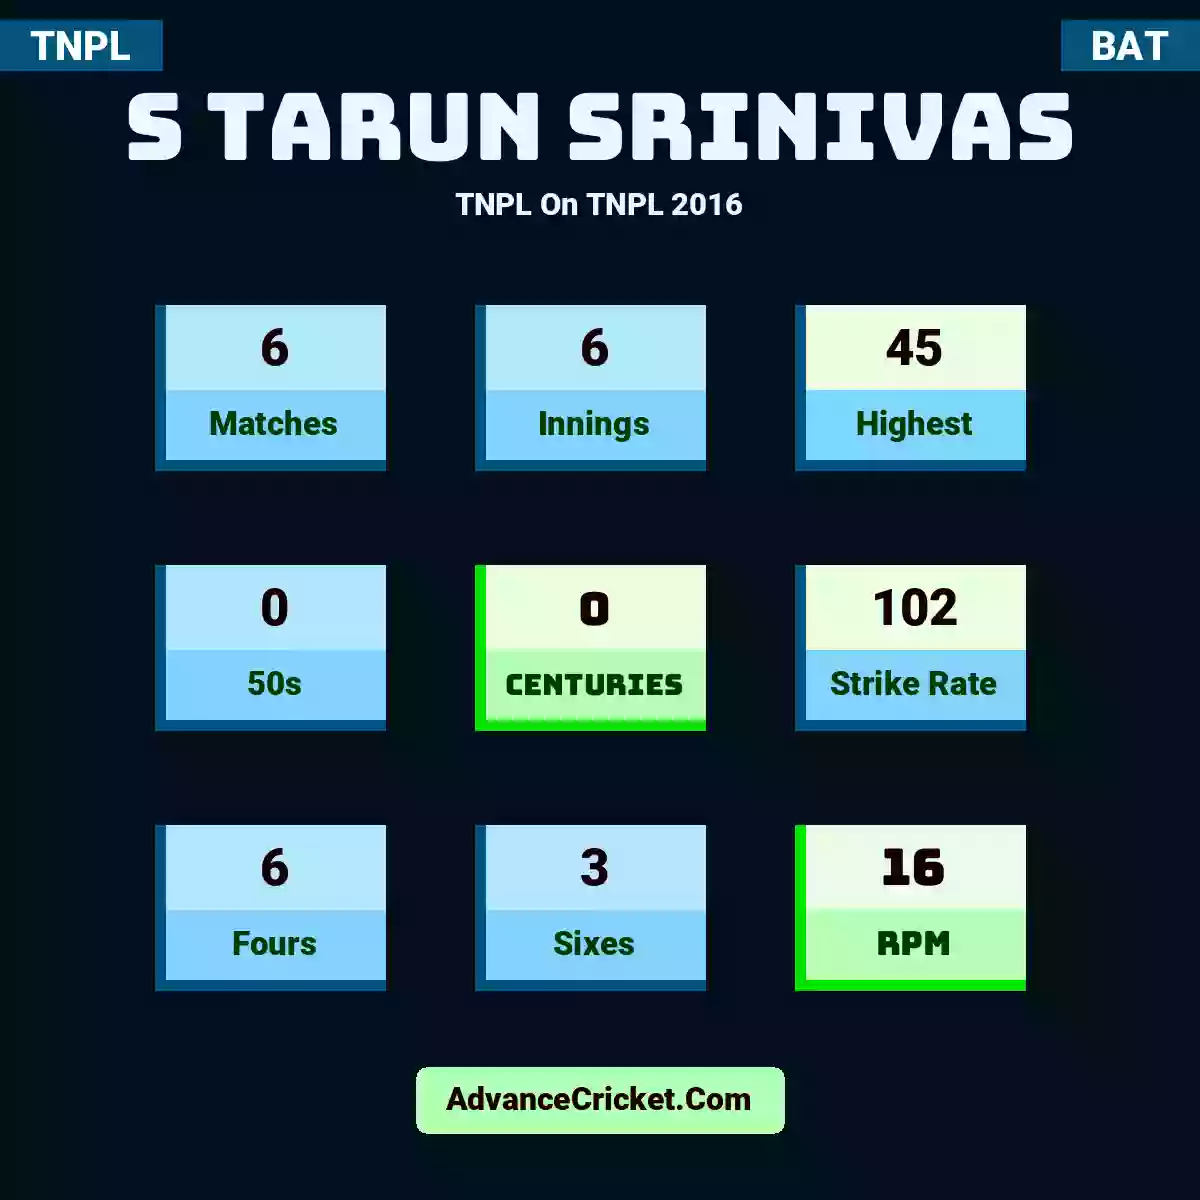 S Tarun Srinivas TNPL  On TNPL 2016, S Tarun Srinivas played 6 matches, scored 45 runs as highest, 0 half-centuries, and 0 centuries, with a strike rate of 102. S.Srinivas hit 6 fours and 3 sixes, with an RPM of 16.